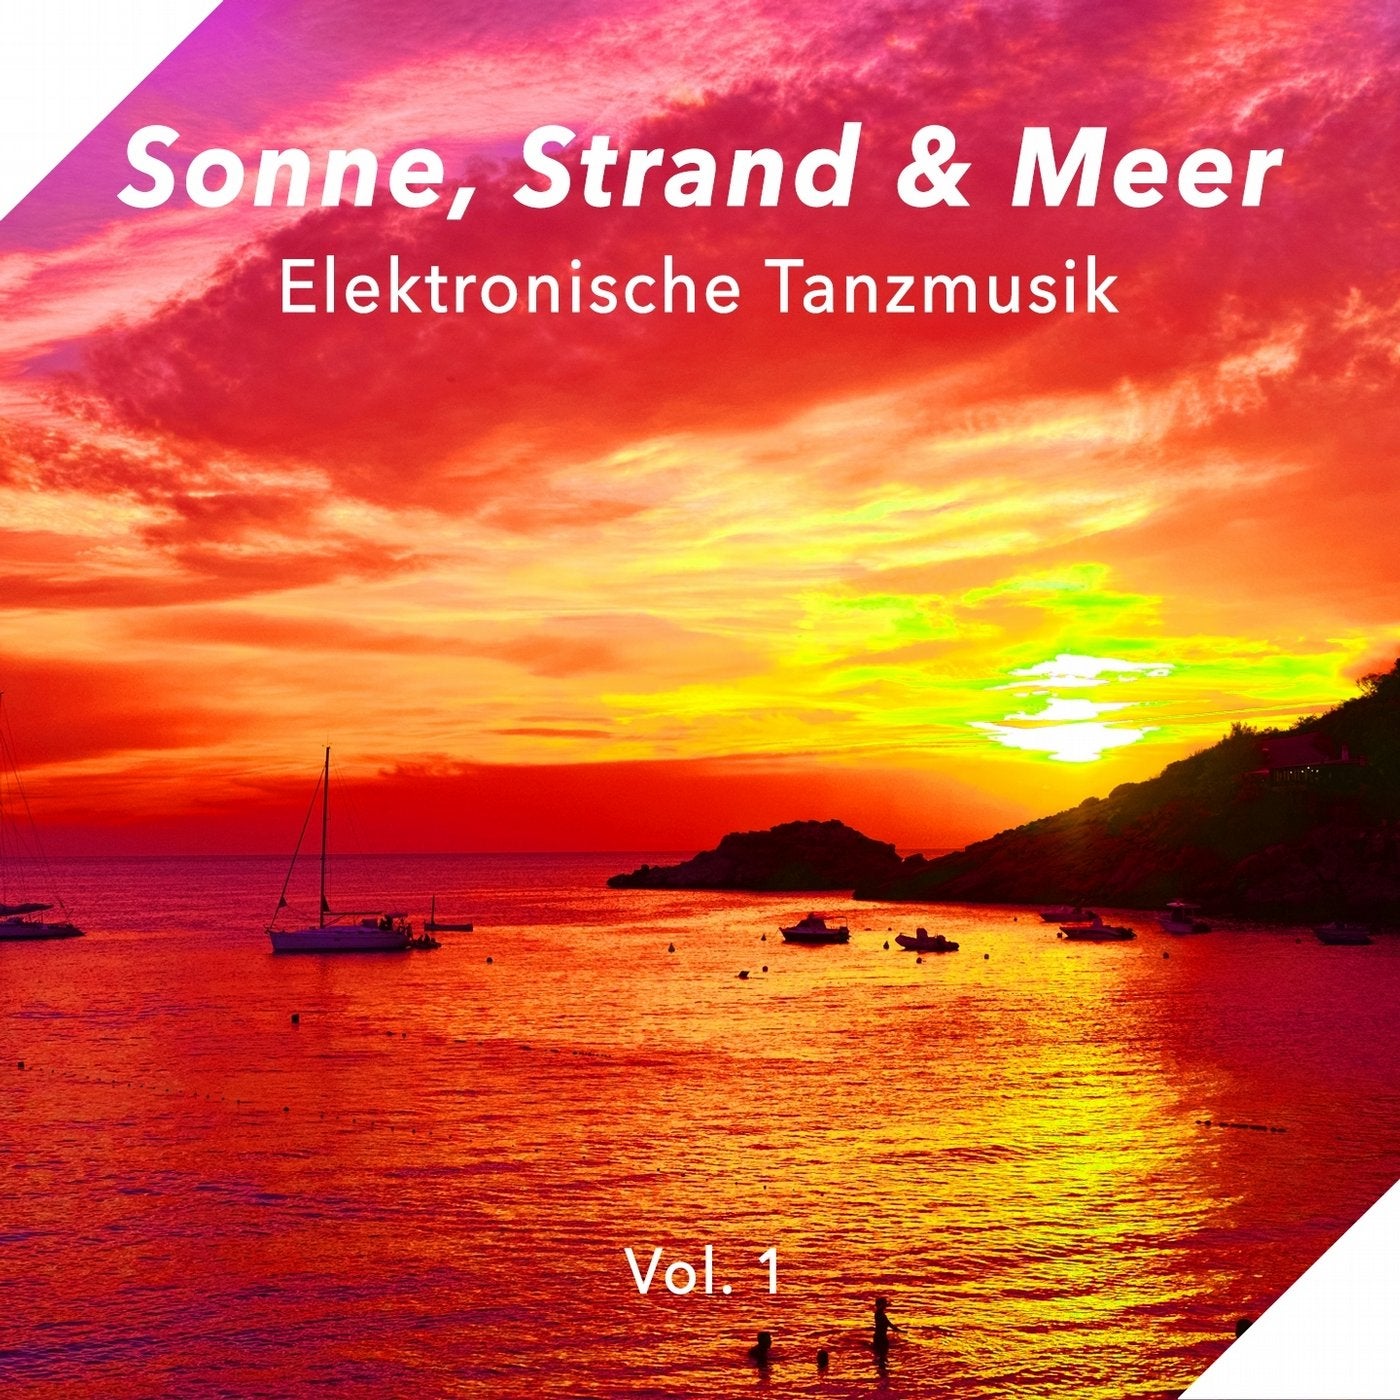 Sonne, Strand & Meer (Elektronische Tanzmusik), Vol. 1 от House Of Hous...